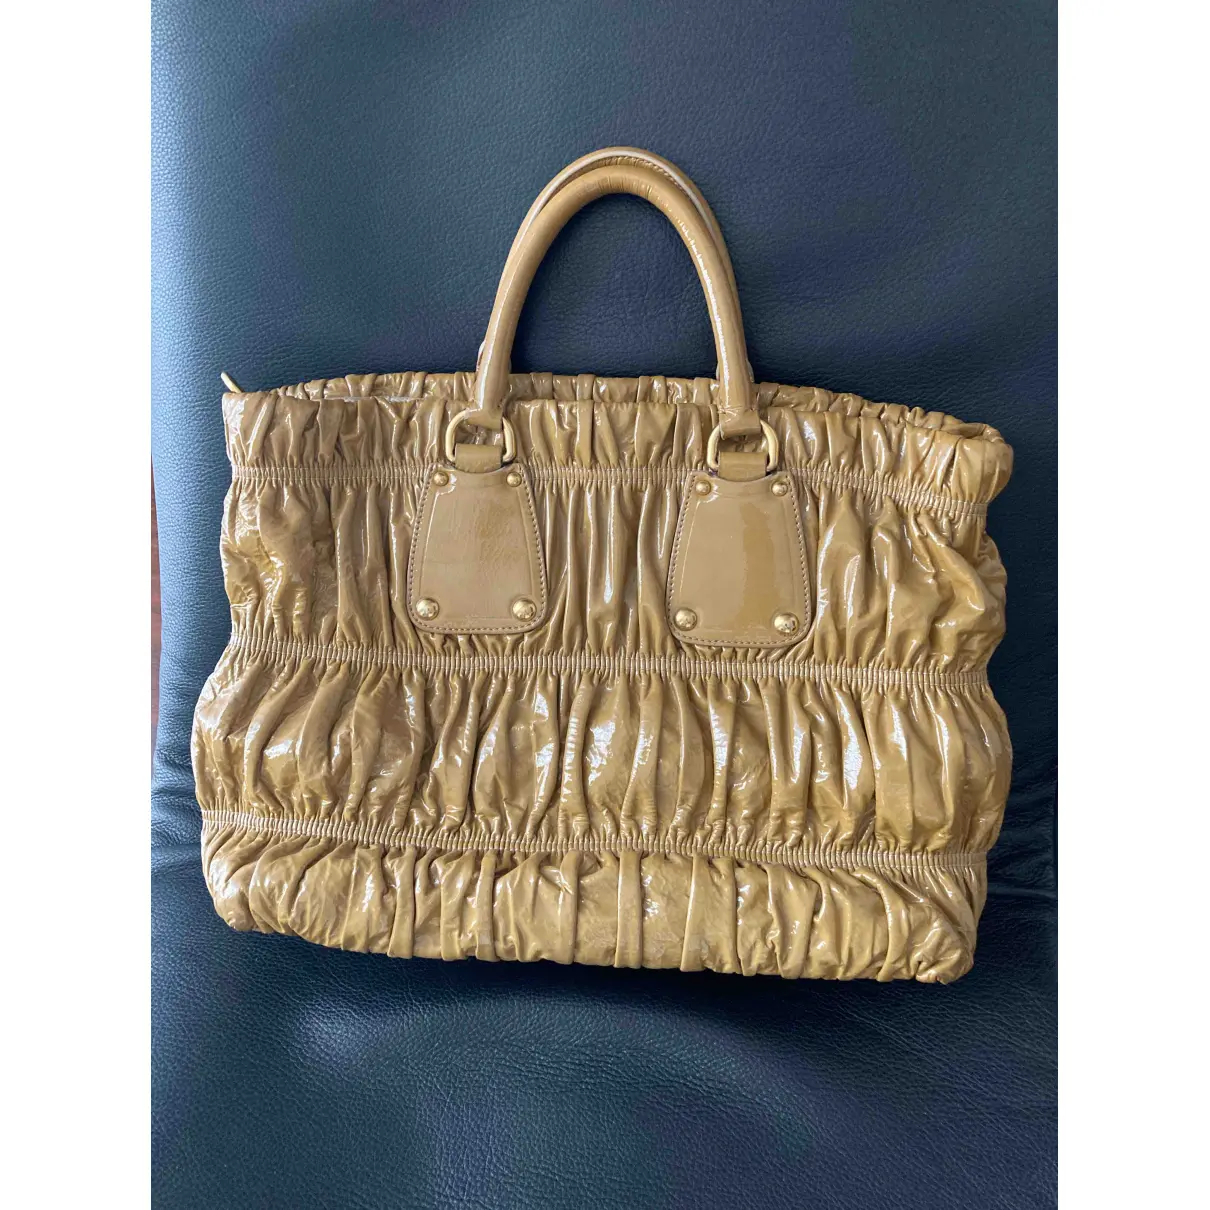 Buy Prada Patent leather handbag online